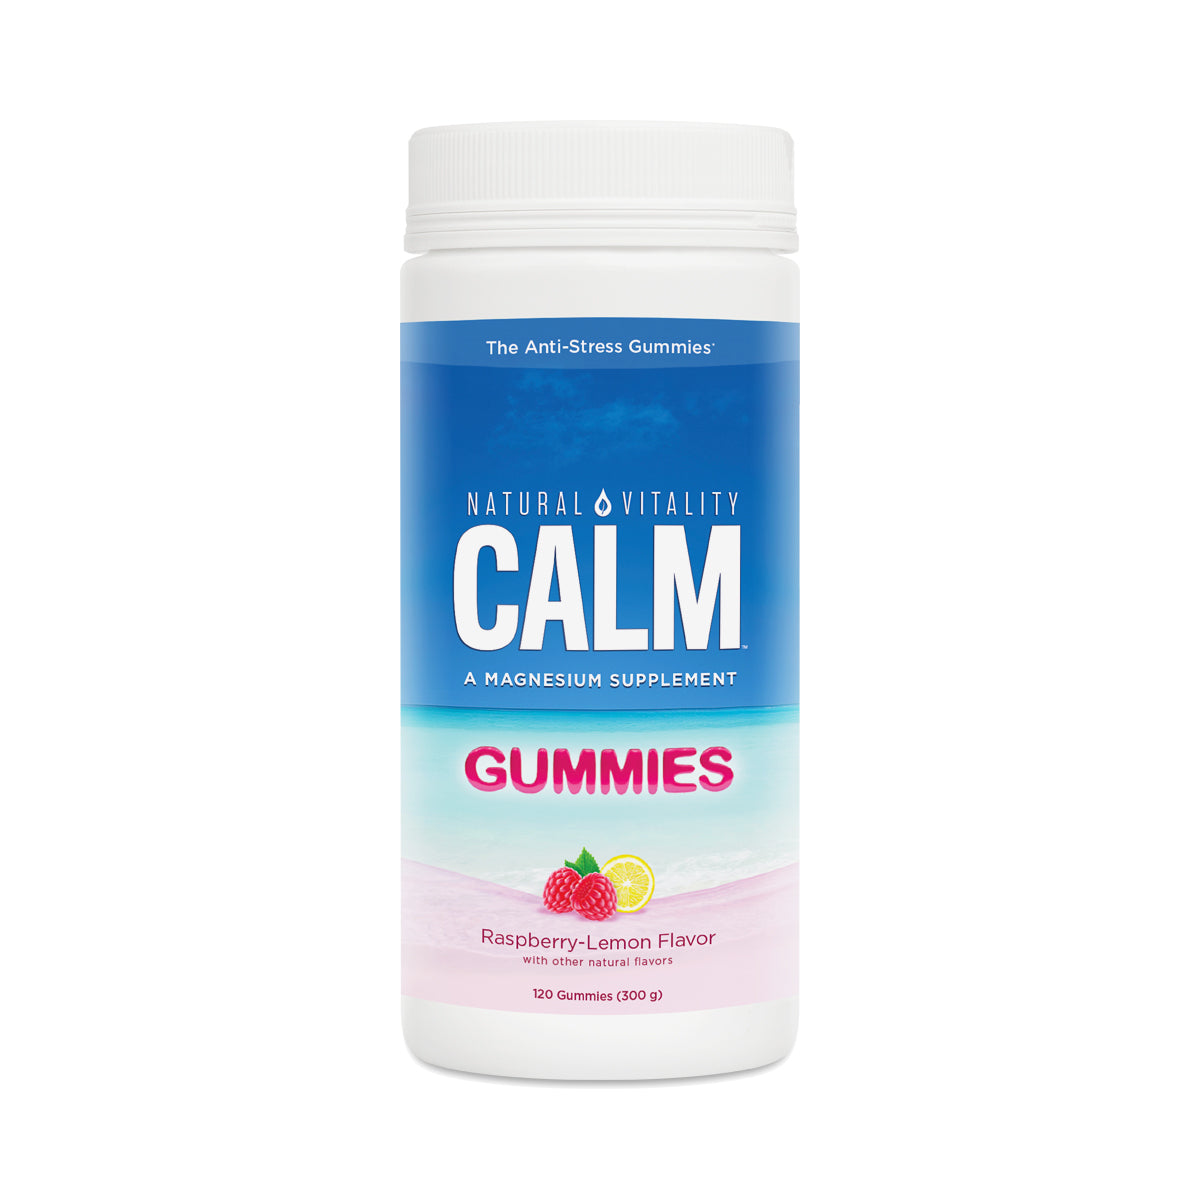 Calm Natural Vitality Magnesium Citrate Dietary Supplement, Anti-Stress Gummies Raspberry Lemon